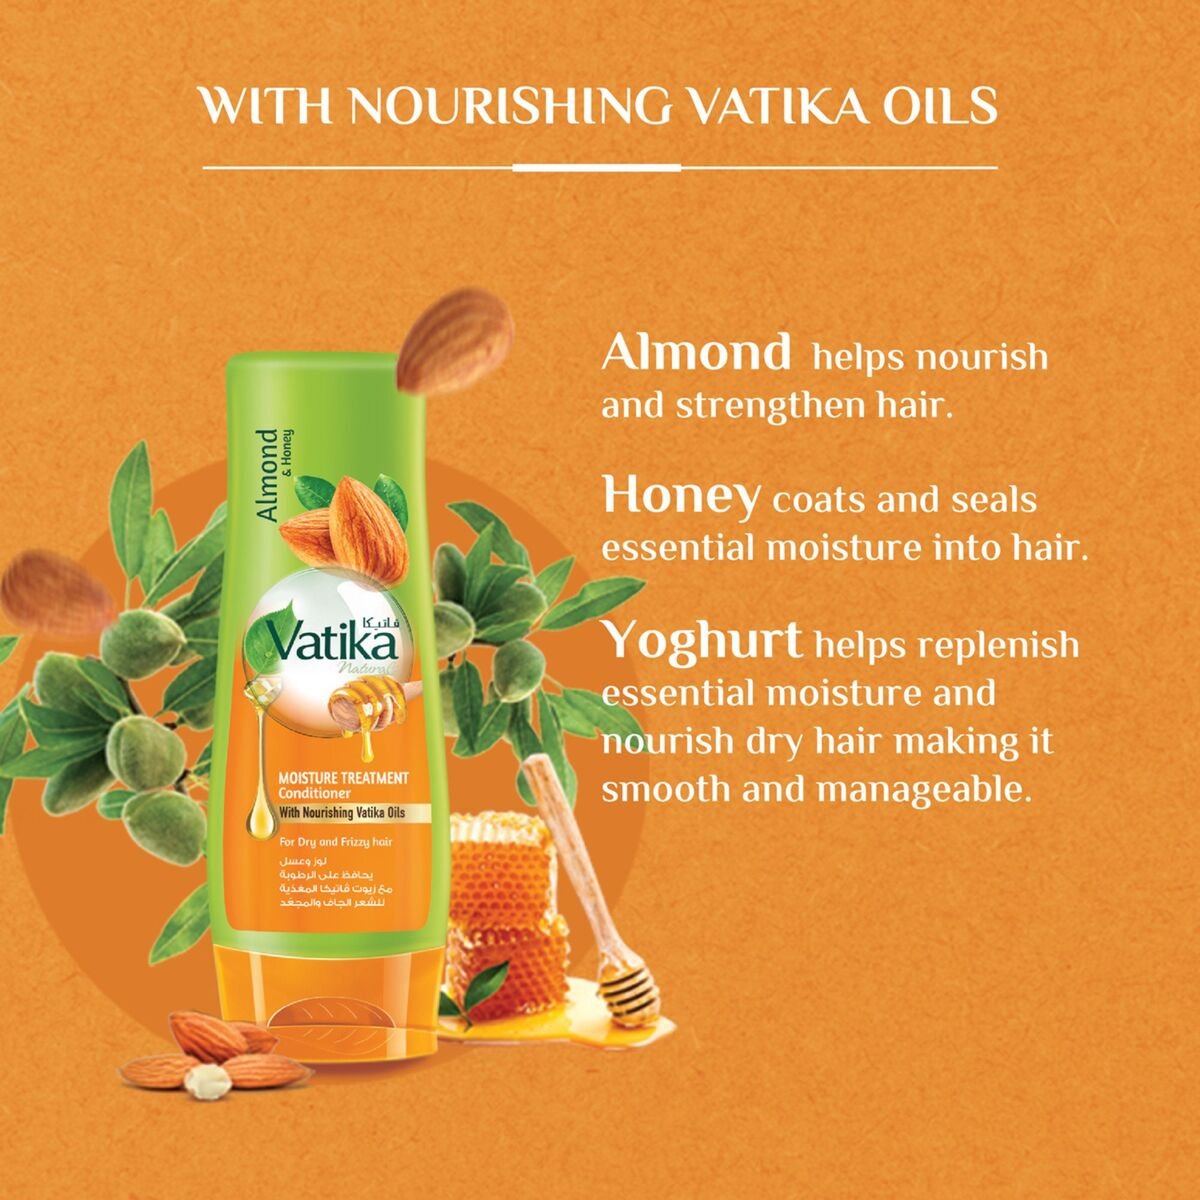 Vatika Naturals Moisture Treatment Conditioner Enriched with Almond & Honey 200 ml